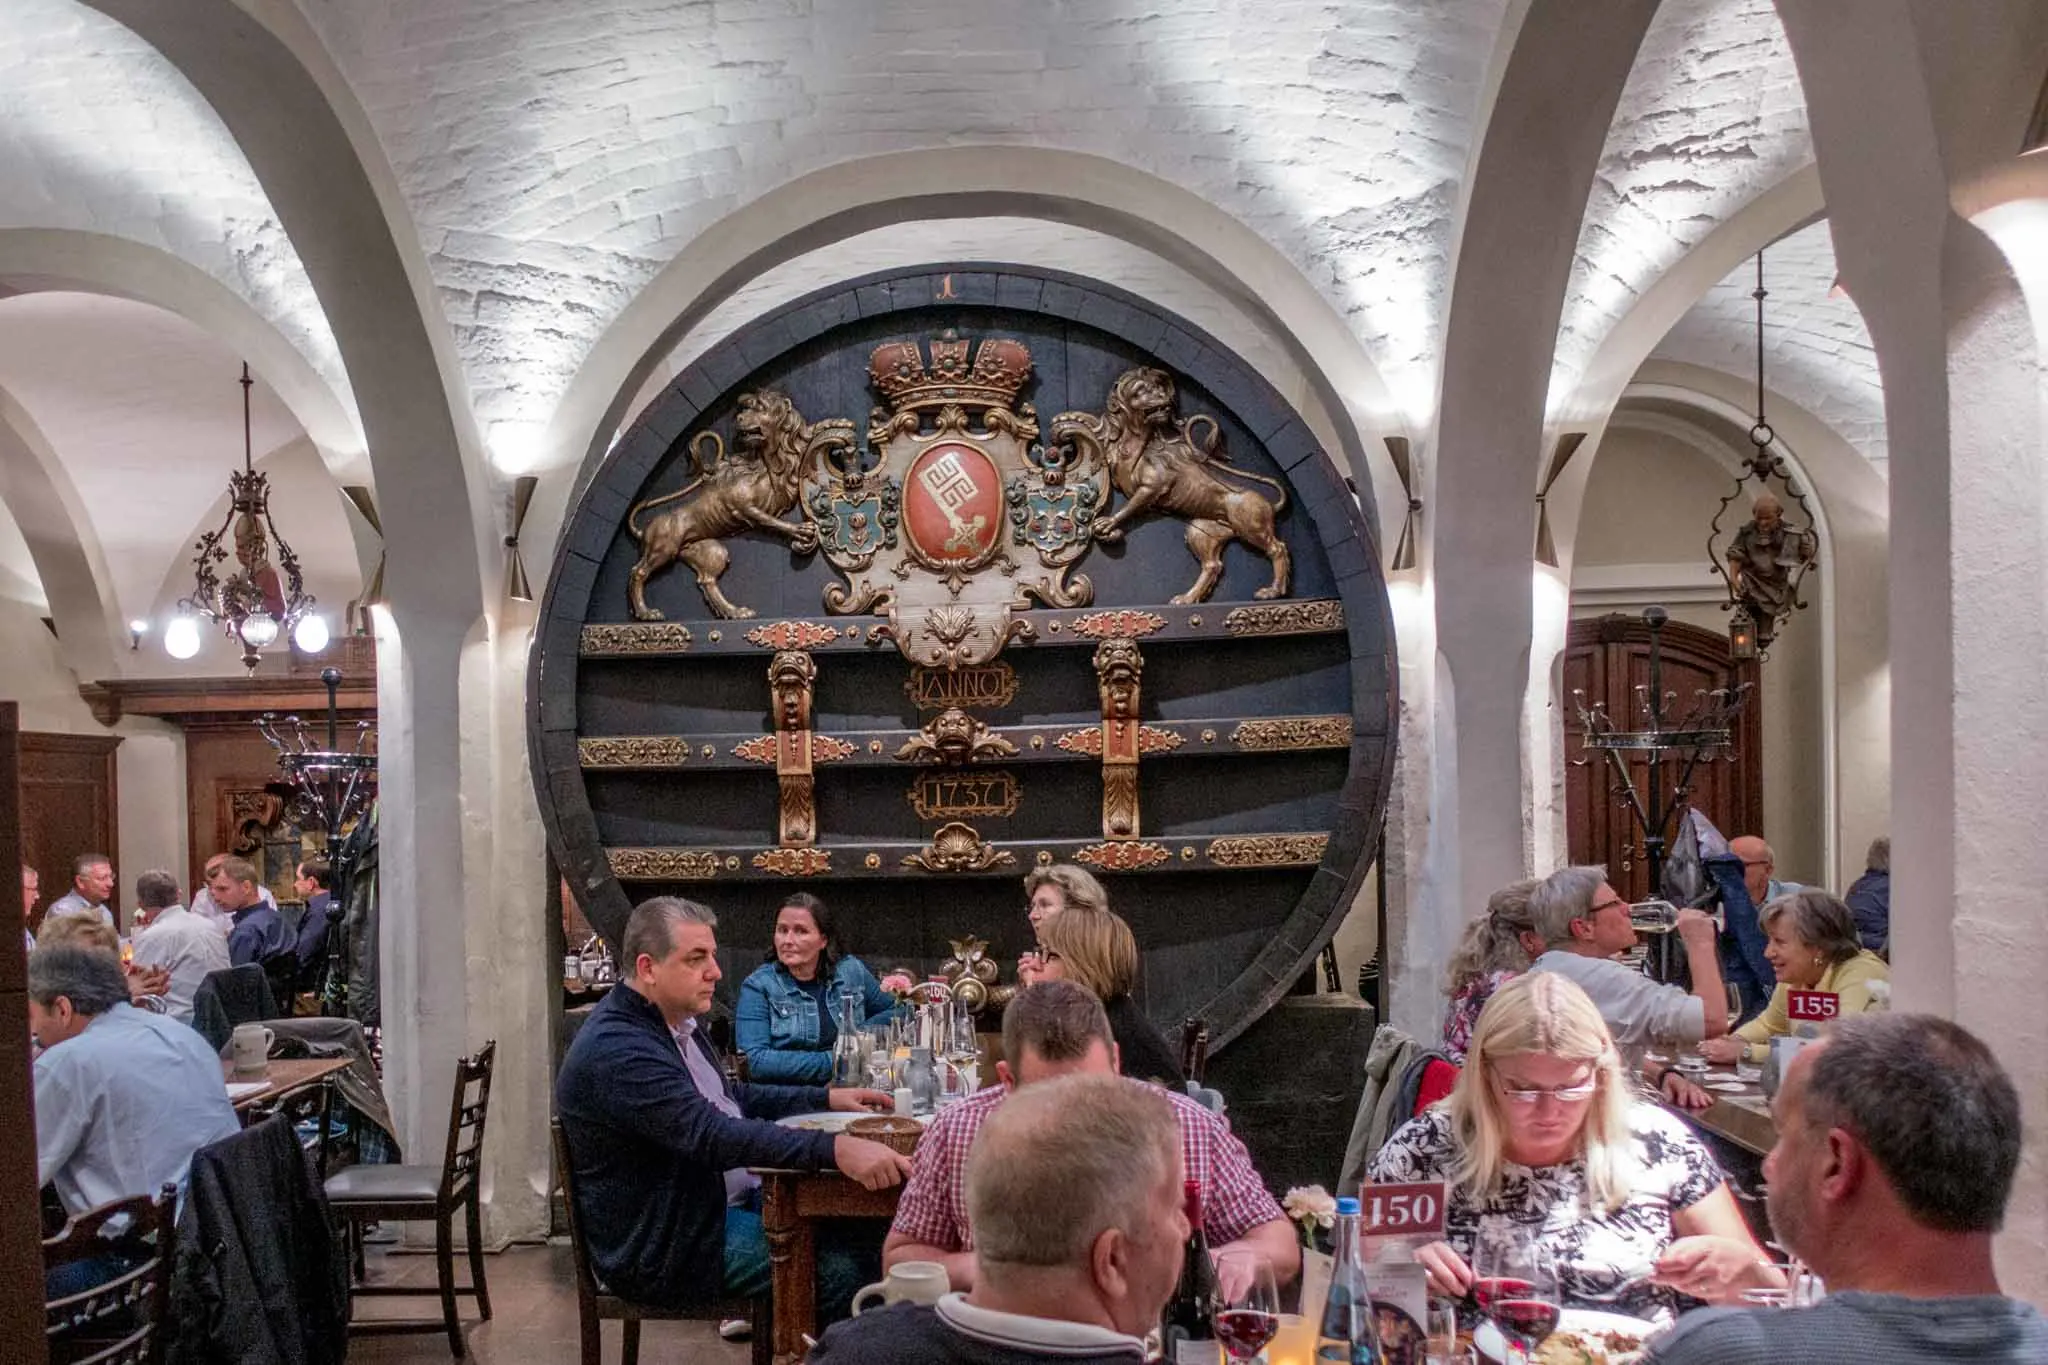 People eating in the Bremer Ratskeller restaurant 